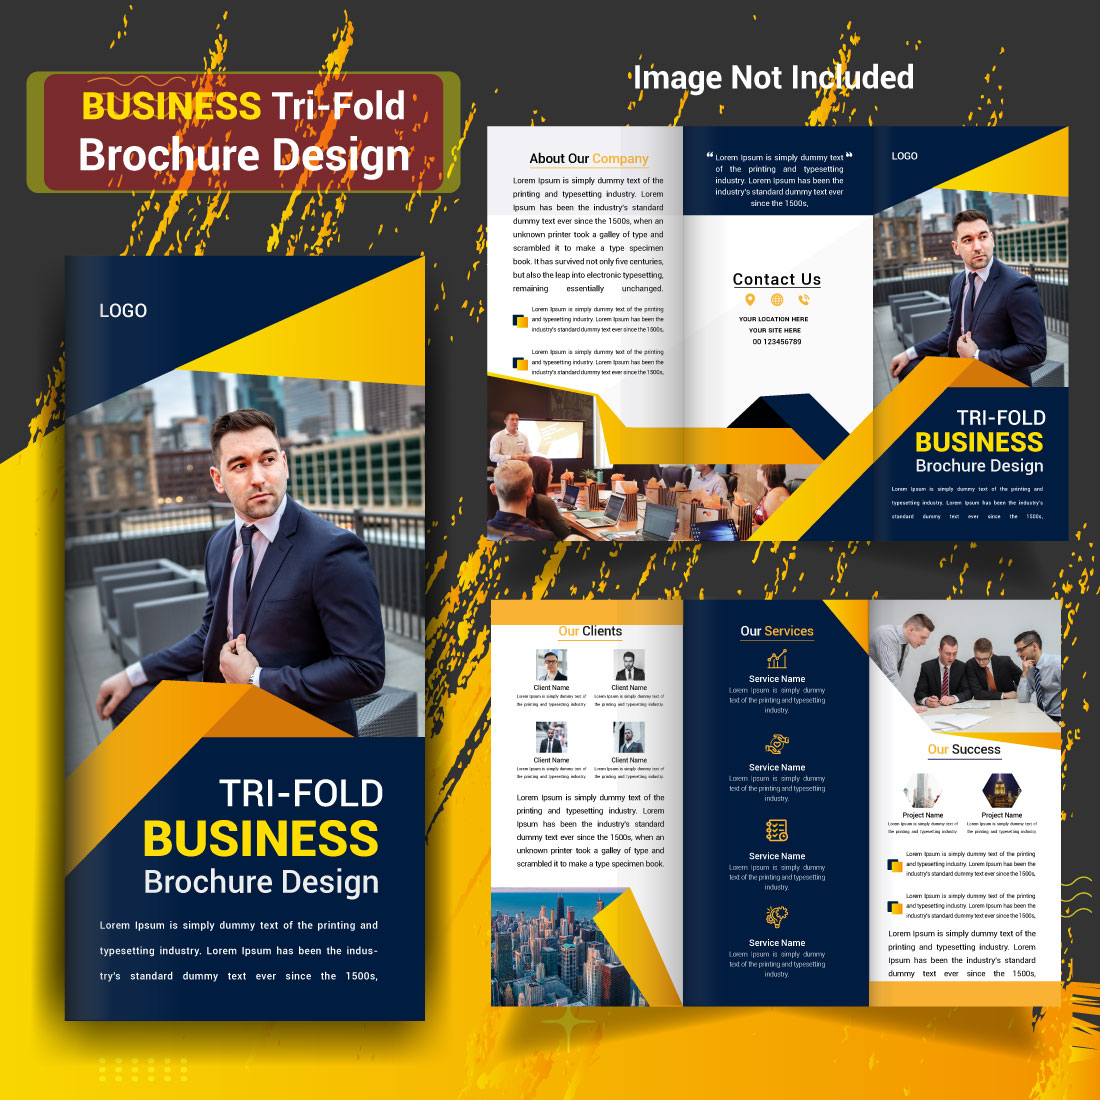 Business Tri Fold Brochure Profile Template Design cover image.